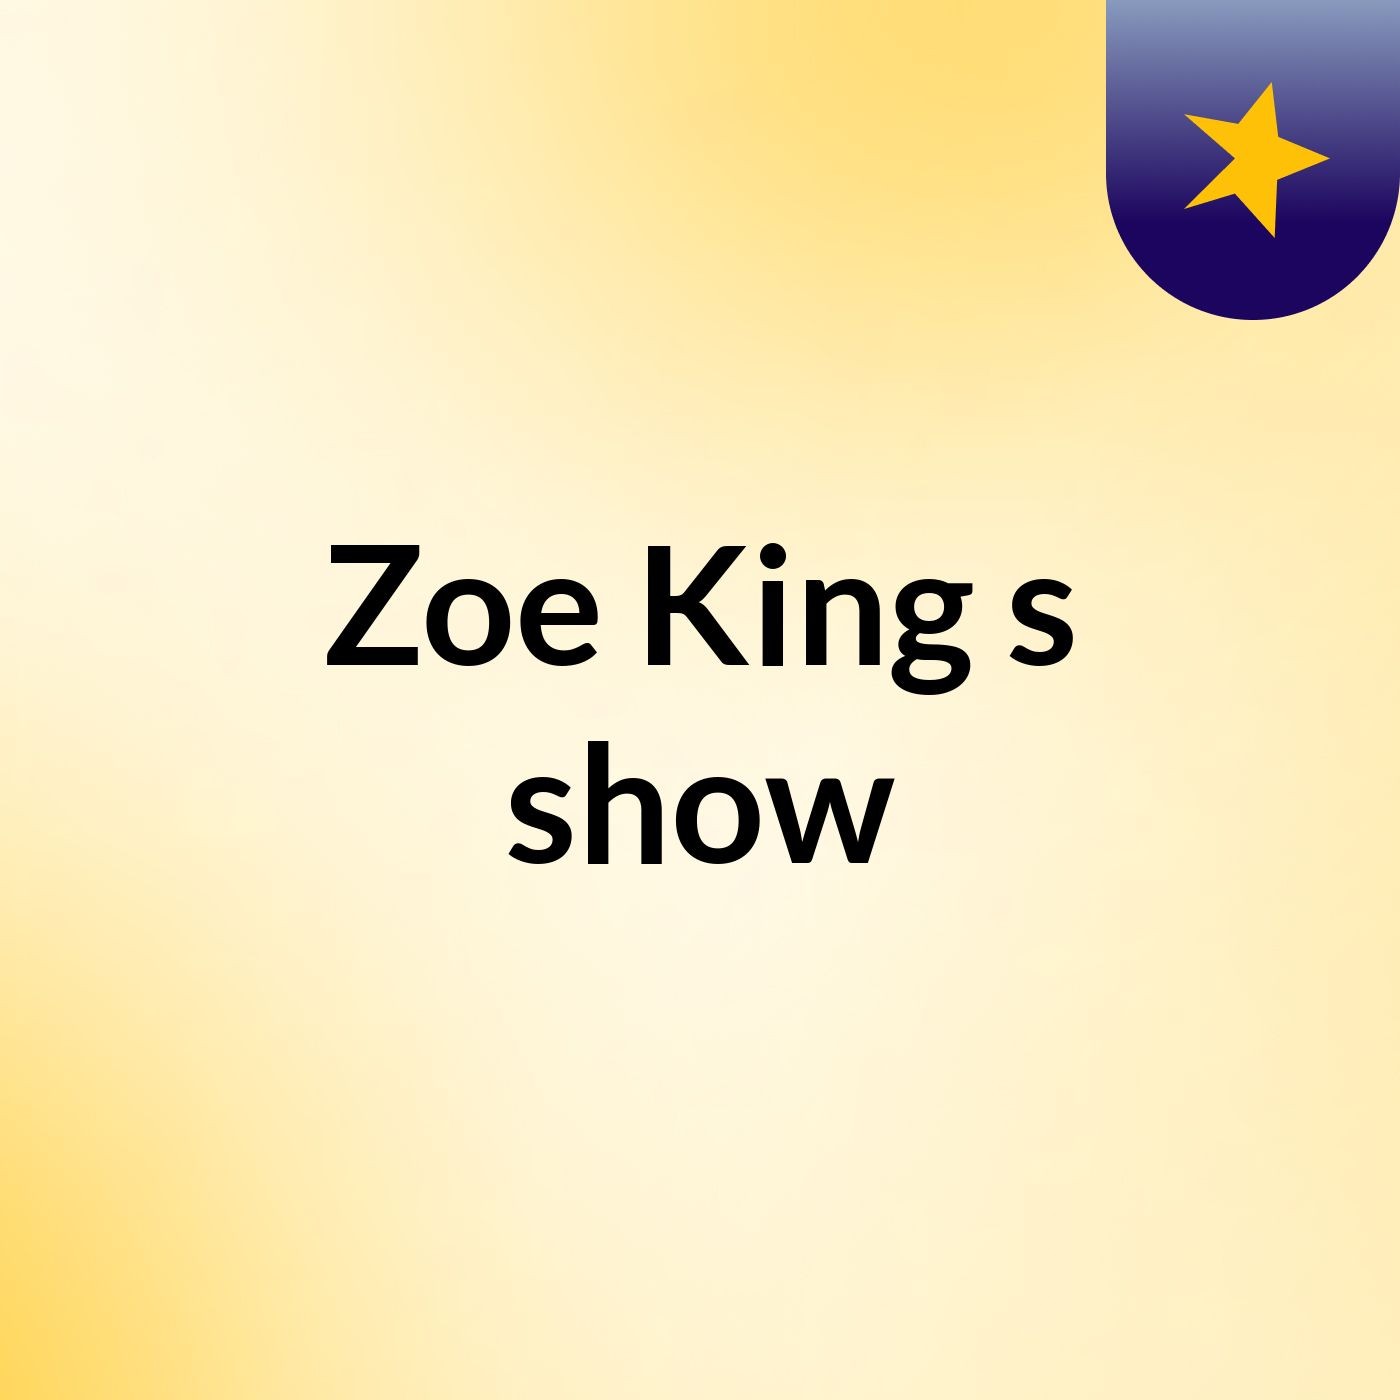 Zoe King's show